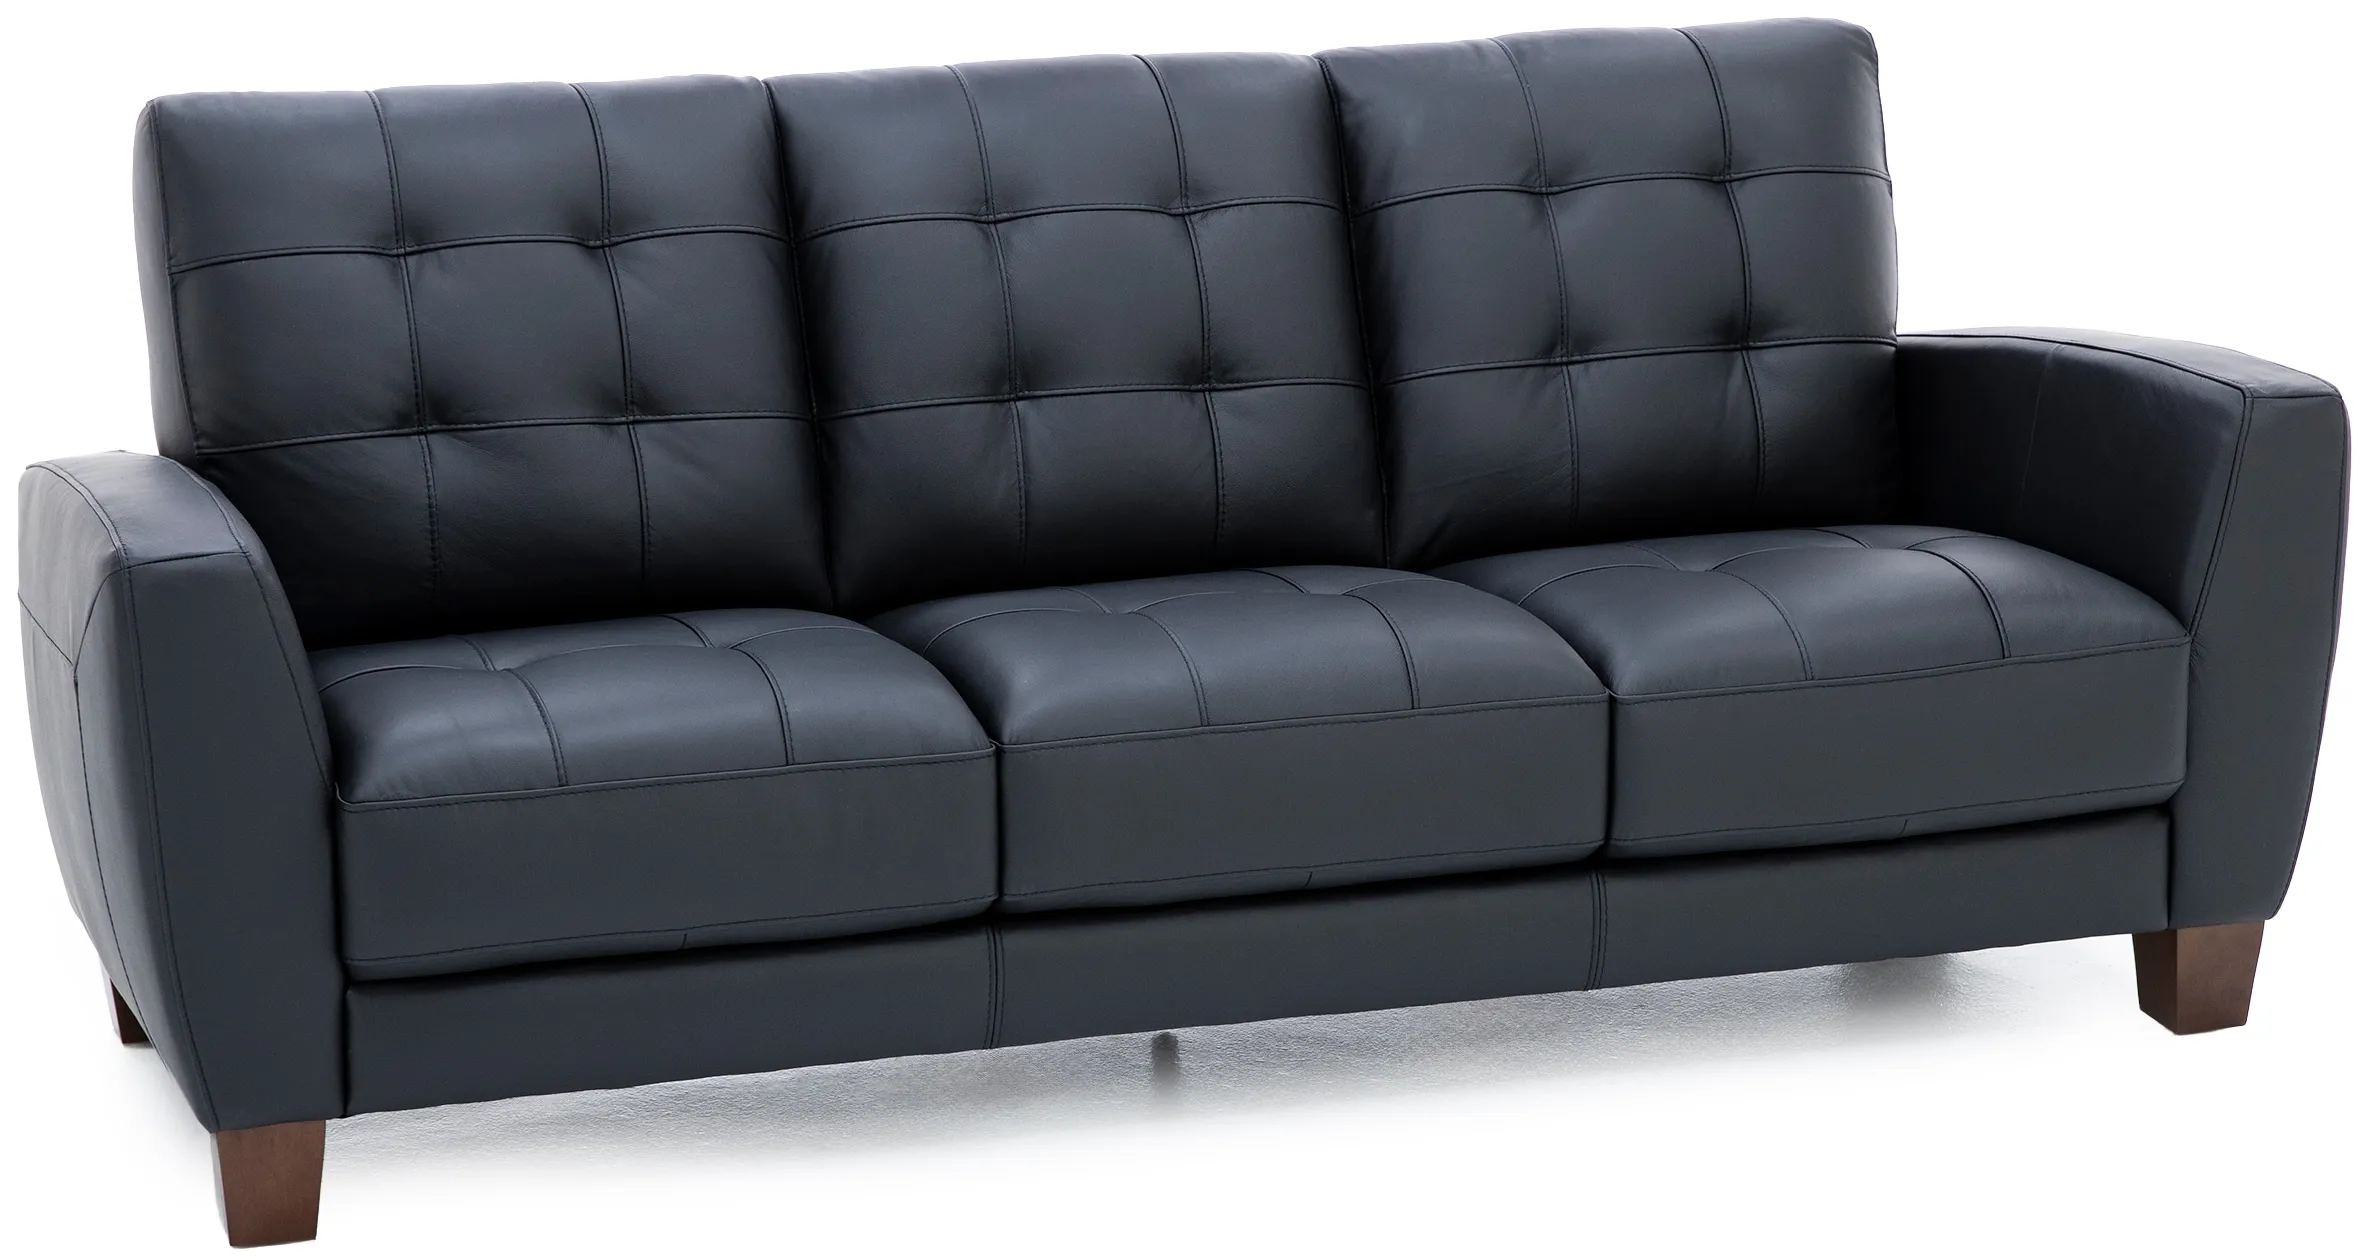 Hendrix Leather Sofa